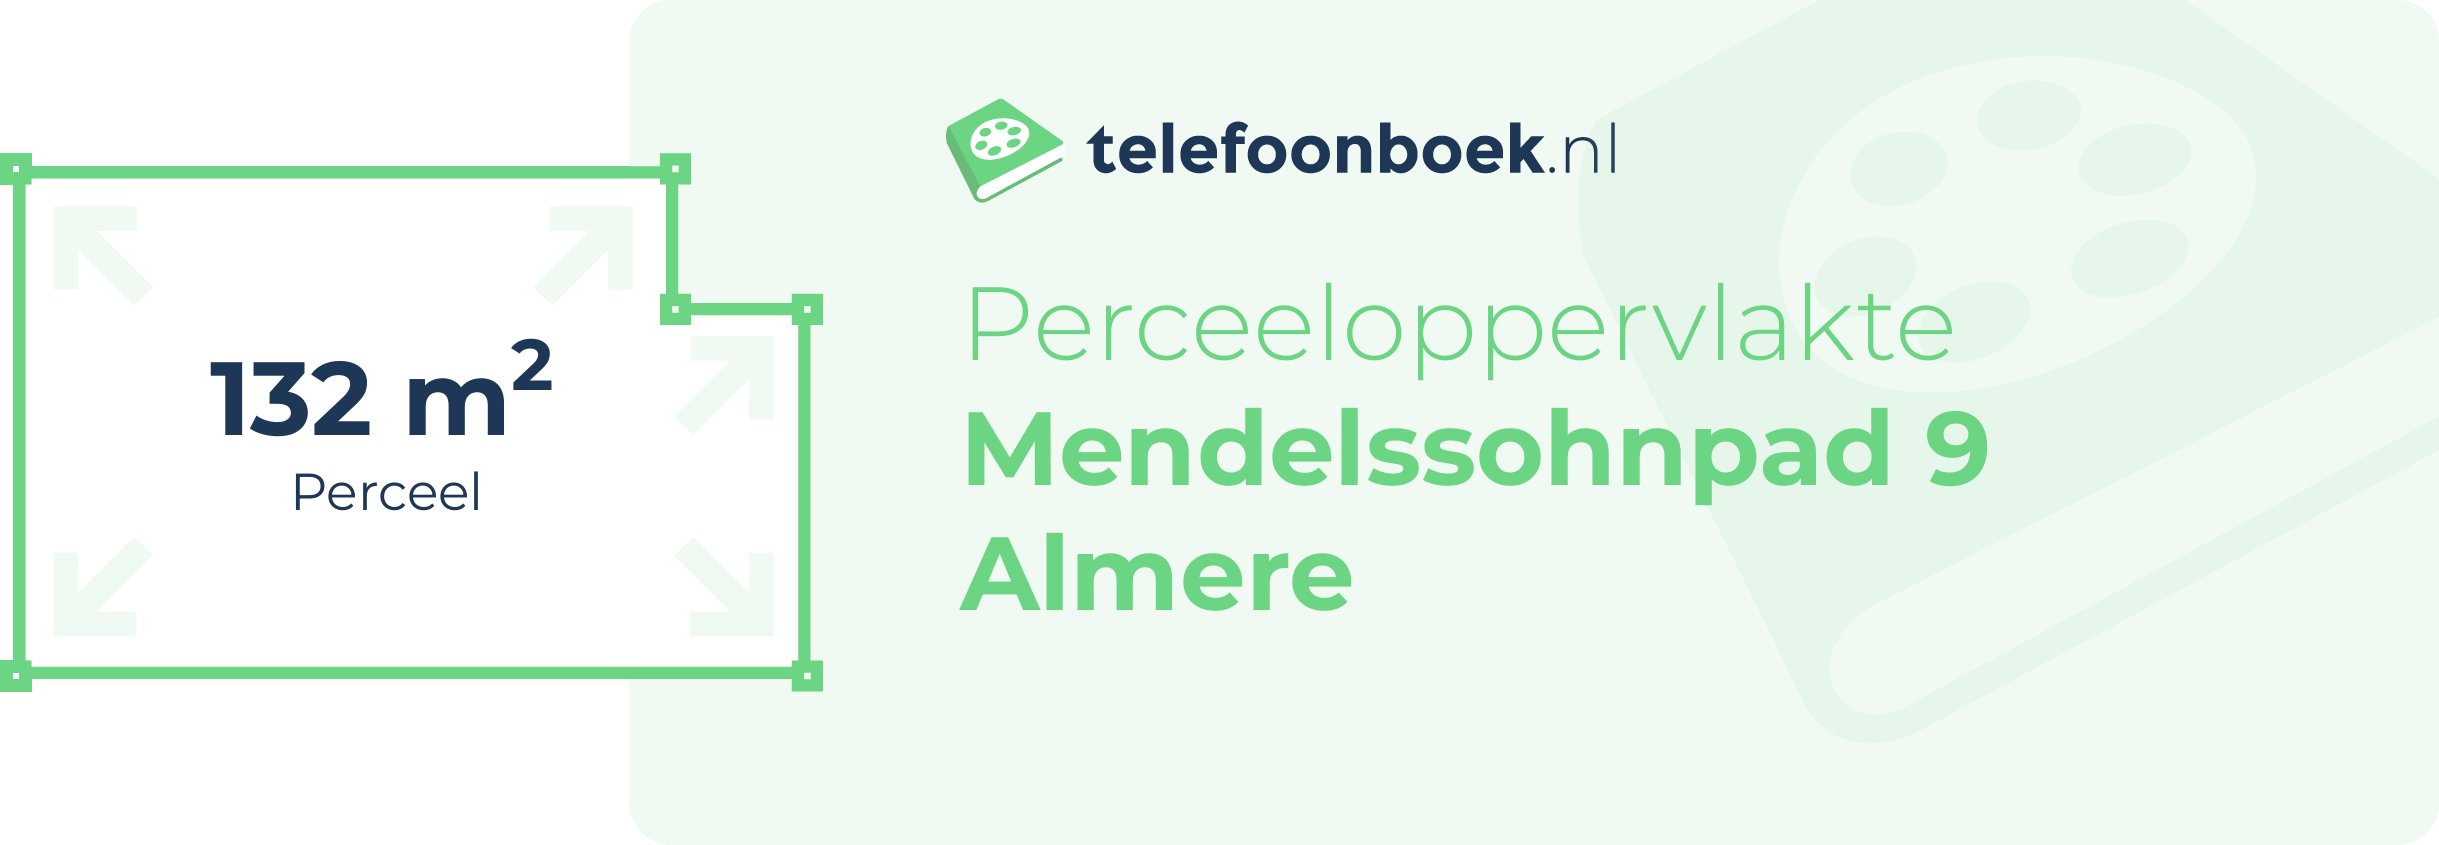 Perceeloppervlakte Mendelssohnpad 9 Almere